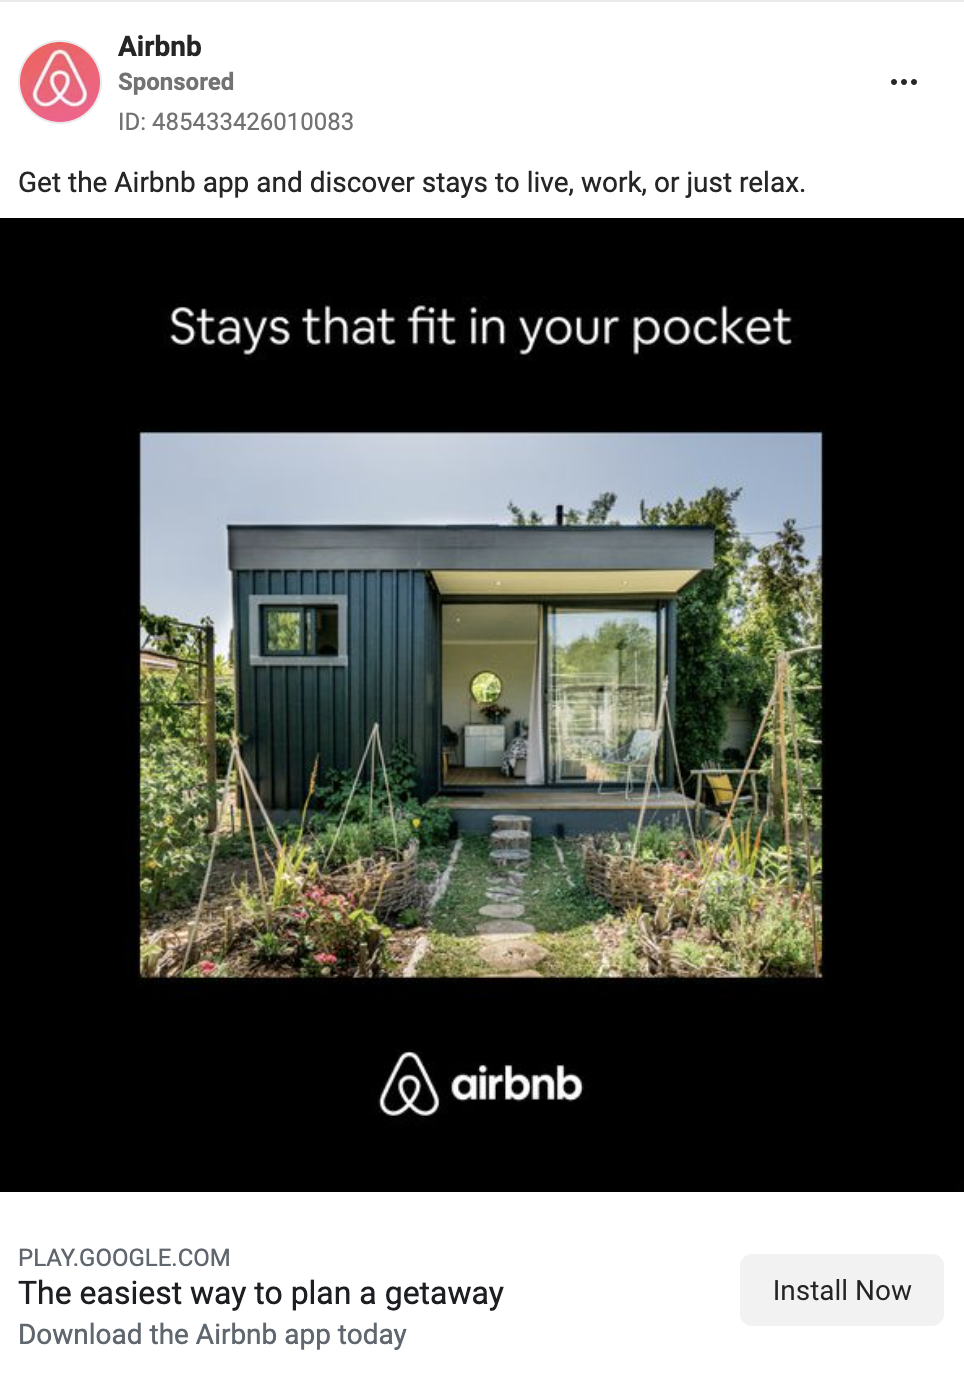 Airbnb advertisement